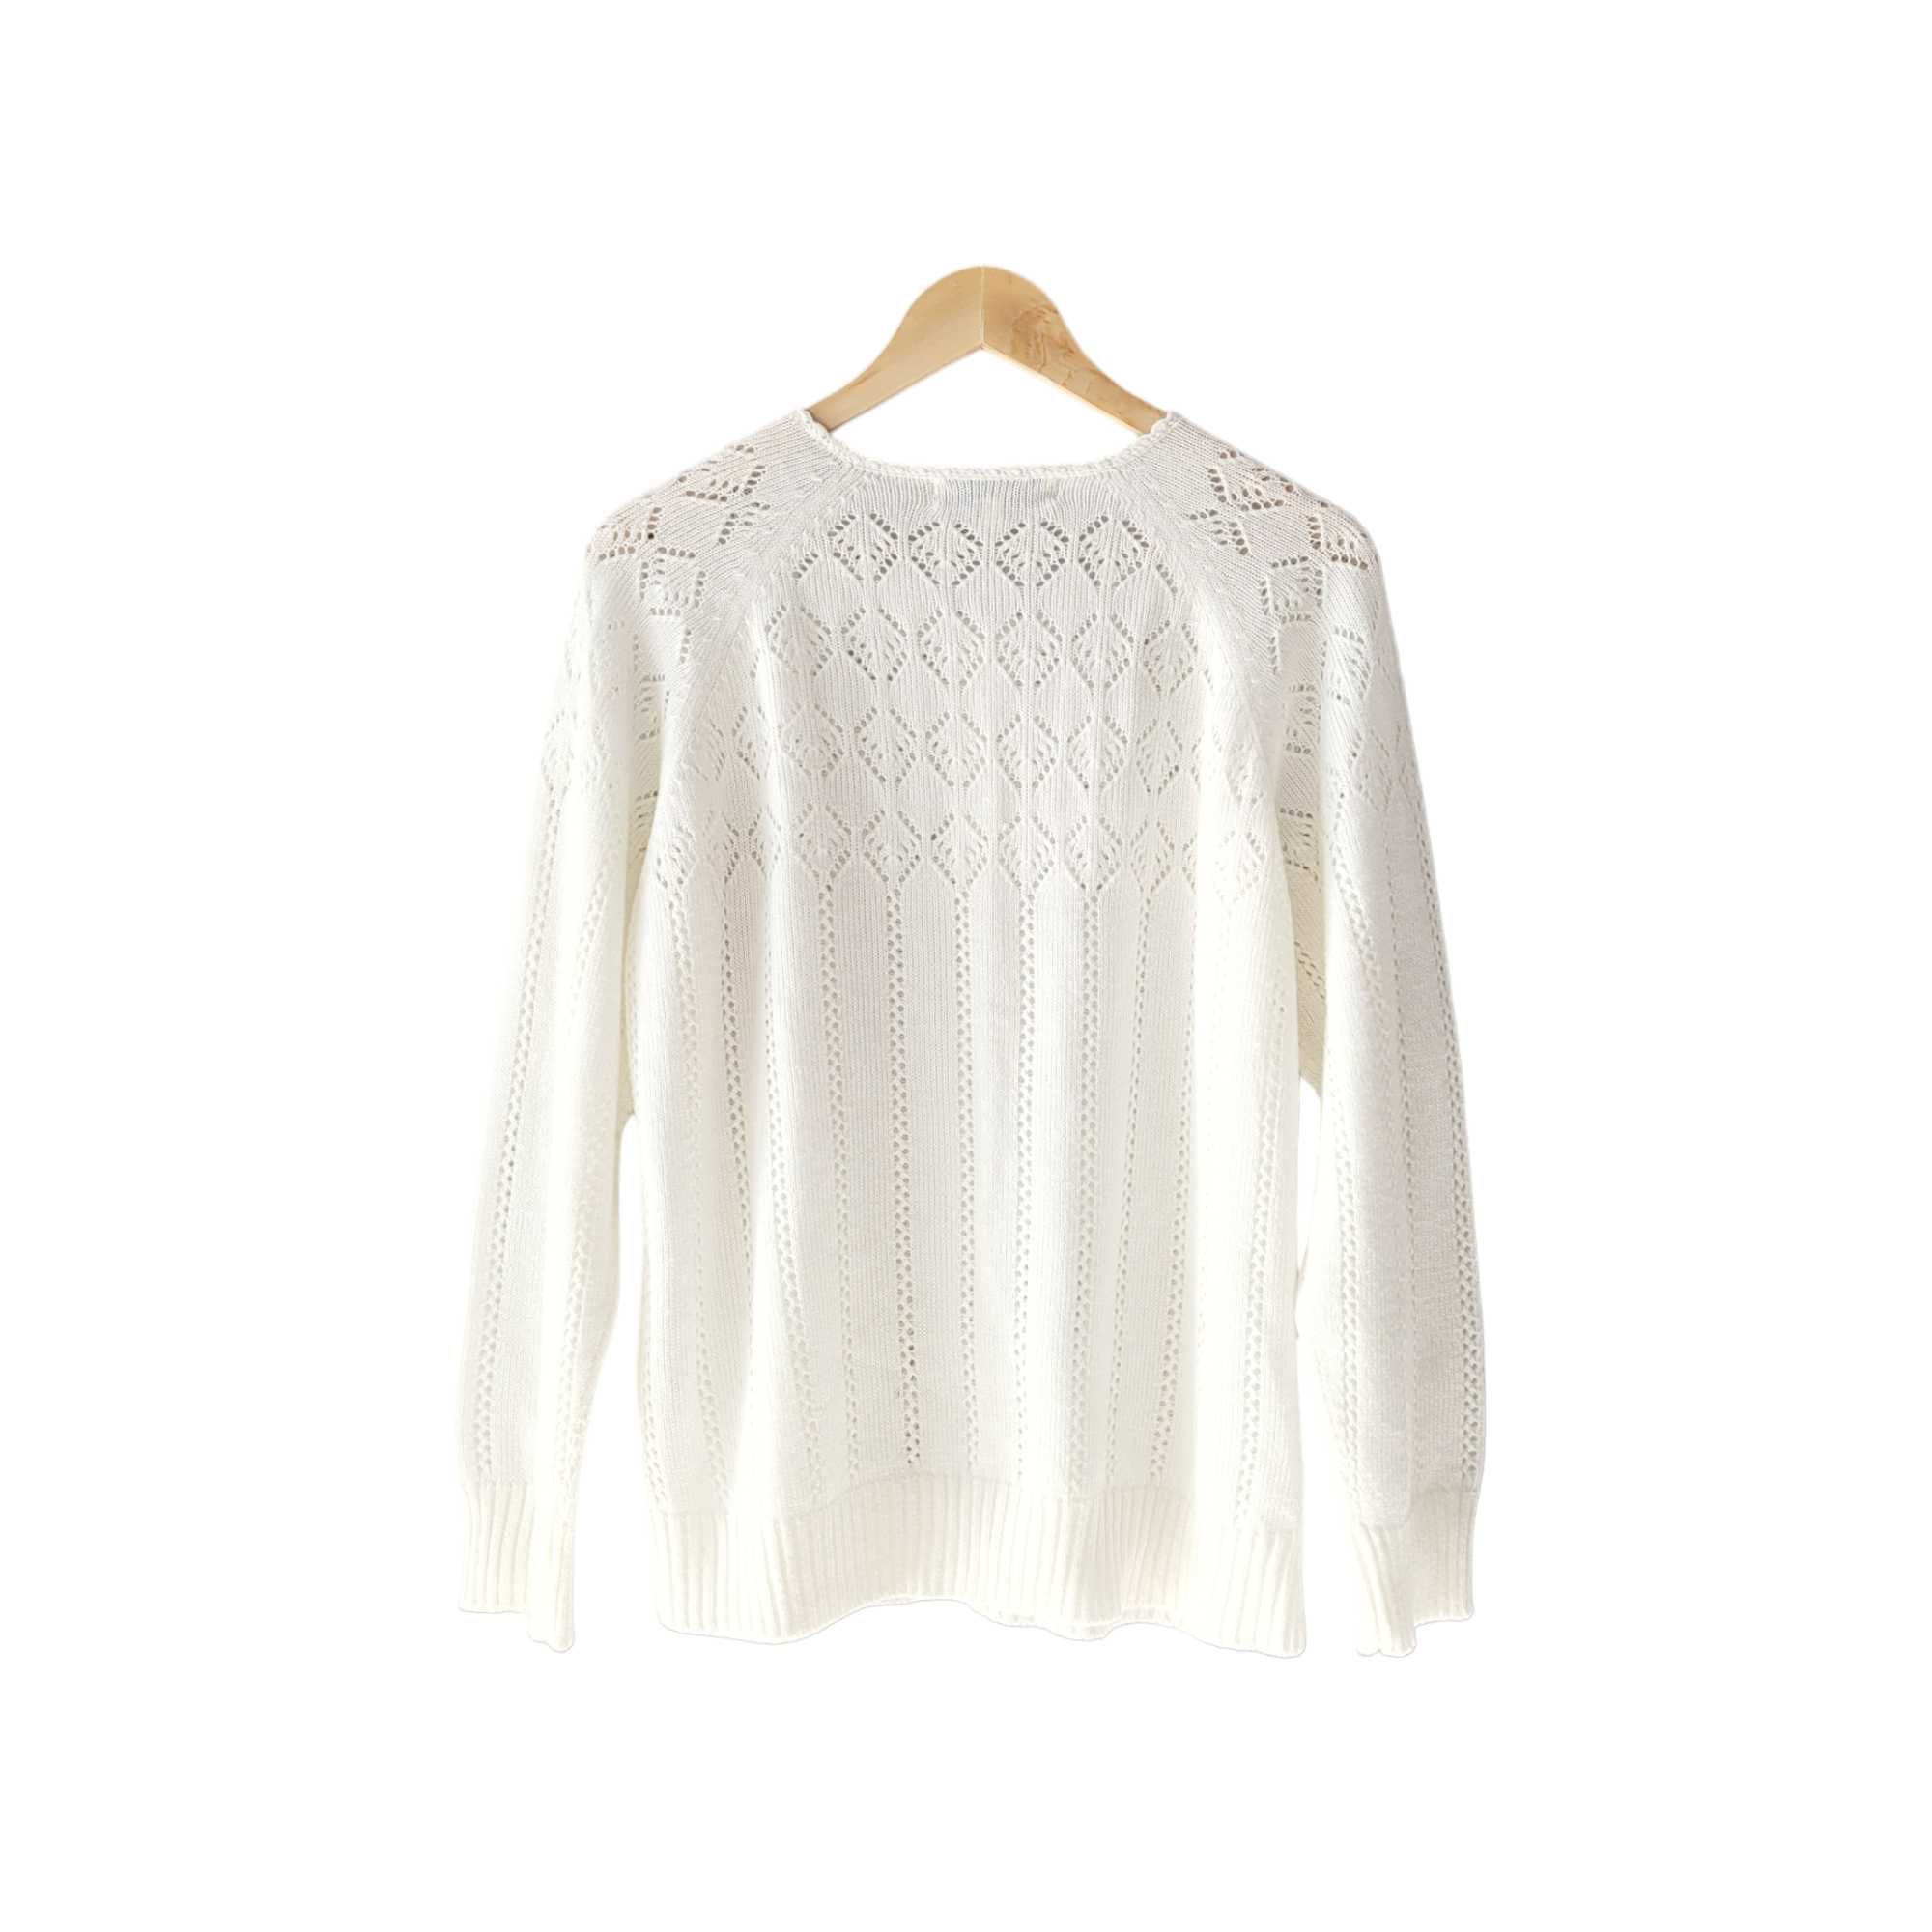 Kremowy ażurowy rozpinany sweter damski kardigan XL vintage boho retro